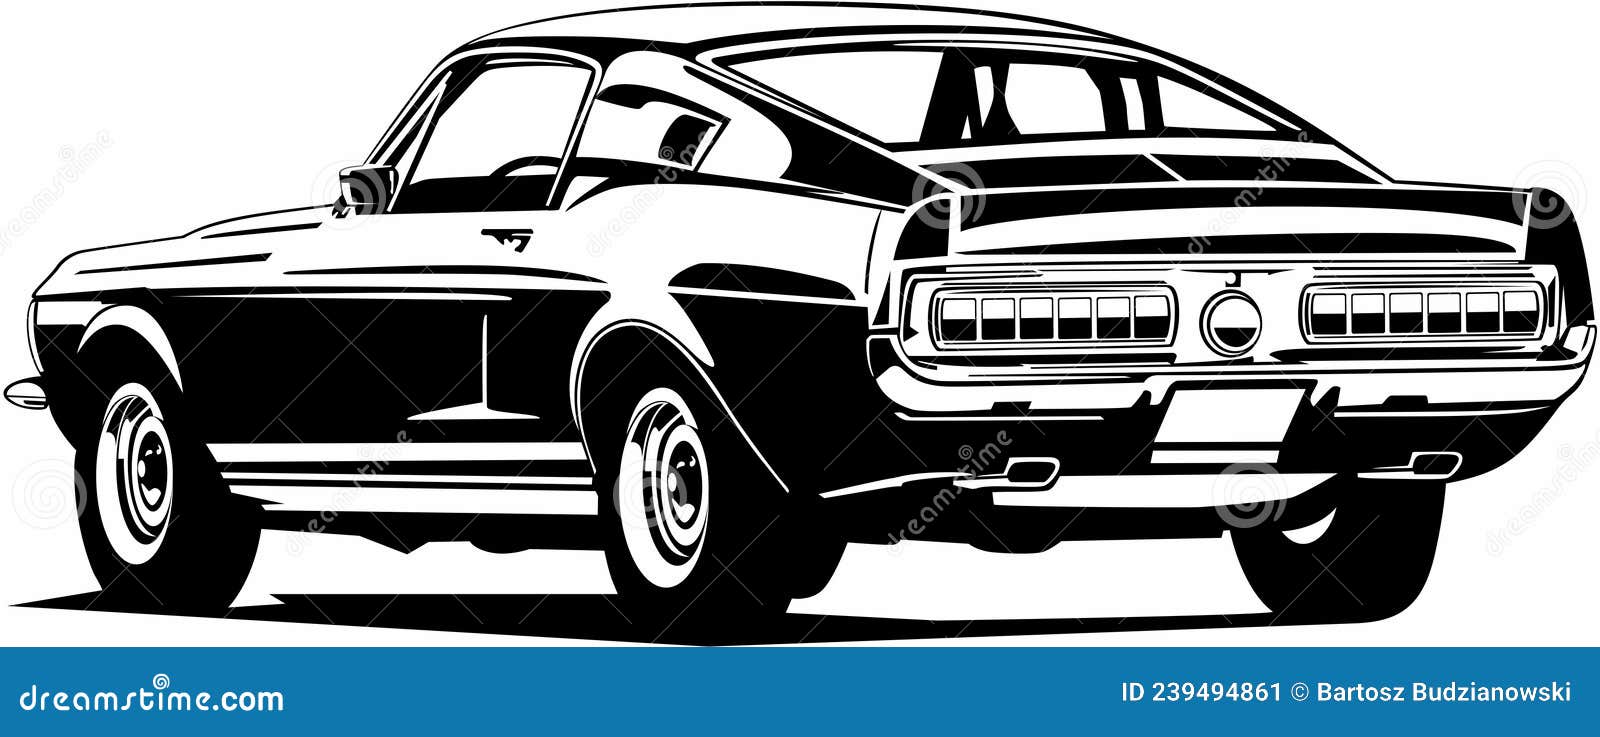 classic vintage retro legendary american muscle car ford mustang bullitt